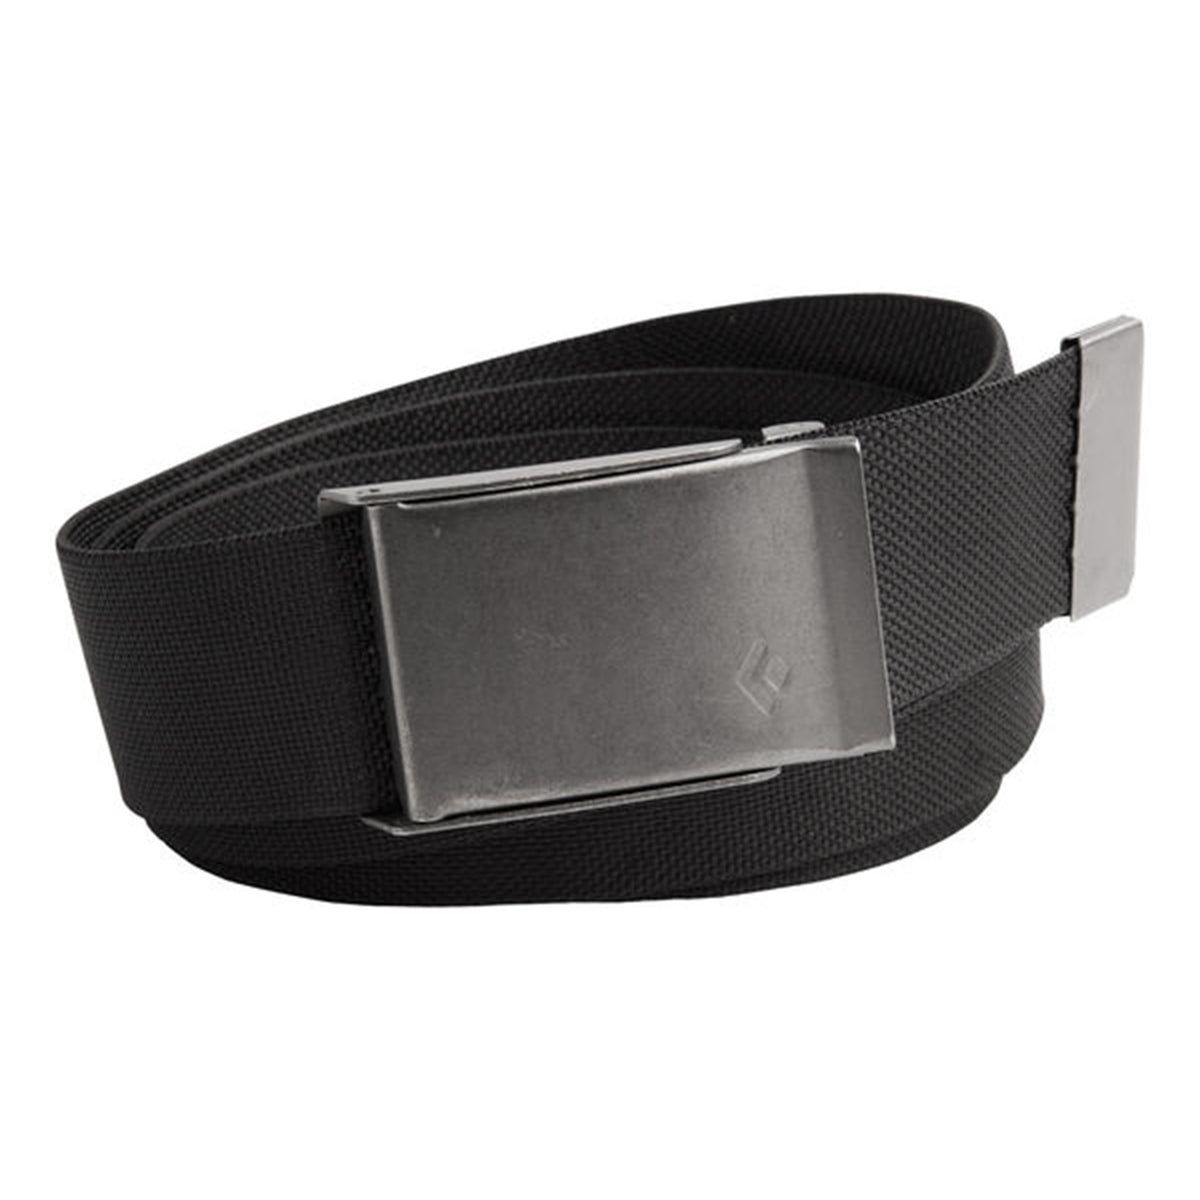 a black webbing belt with a metal buckle